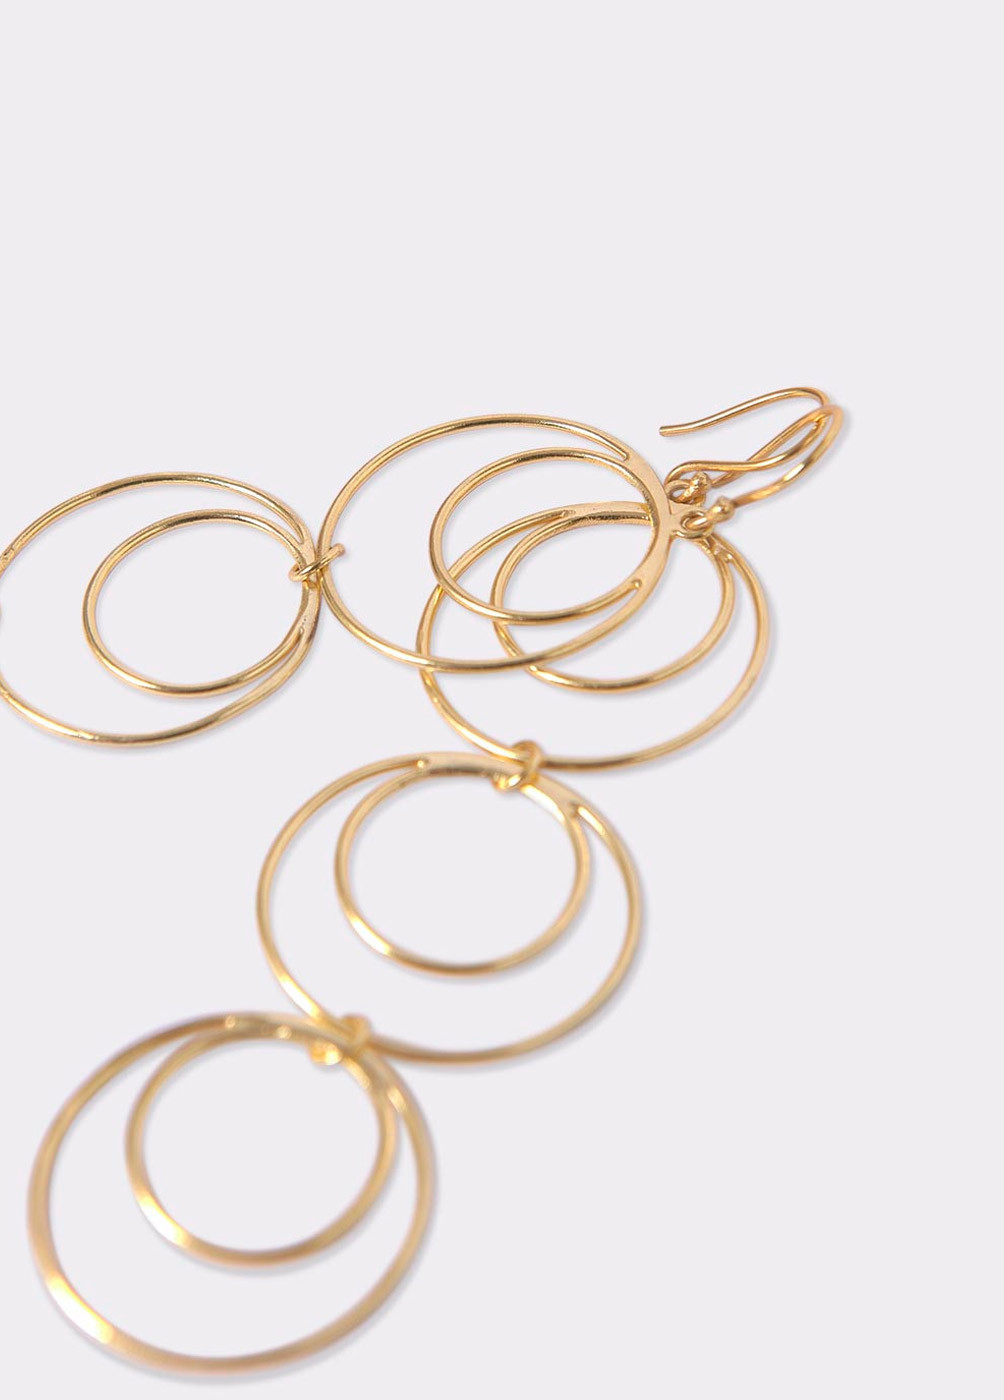 Long Gold Oval Hoop Earrings (40 mm) Handmade In Italy